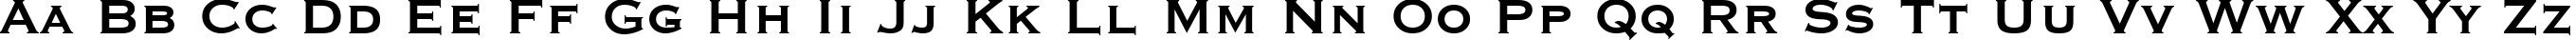 Пример написания английского алфавита шрифтом Copperplate Gothic Bold BT